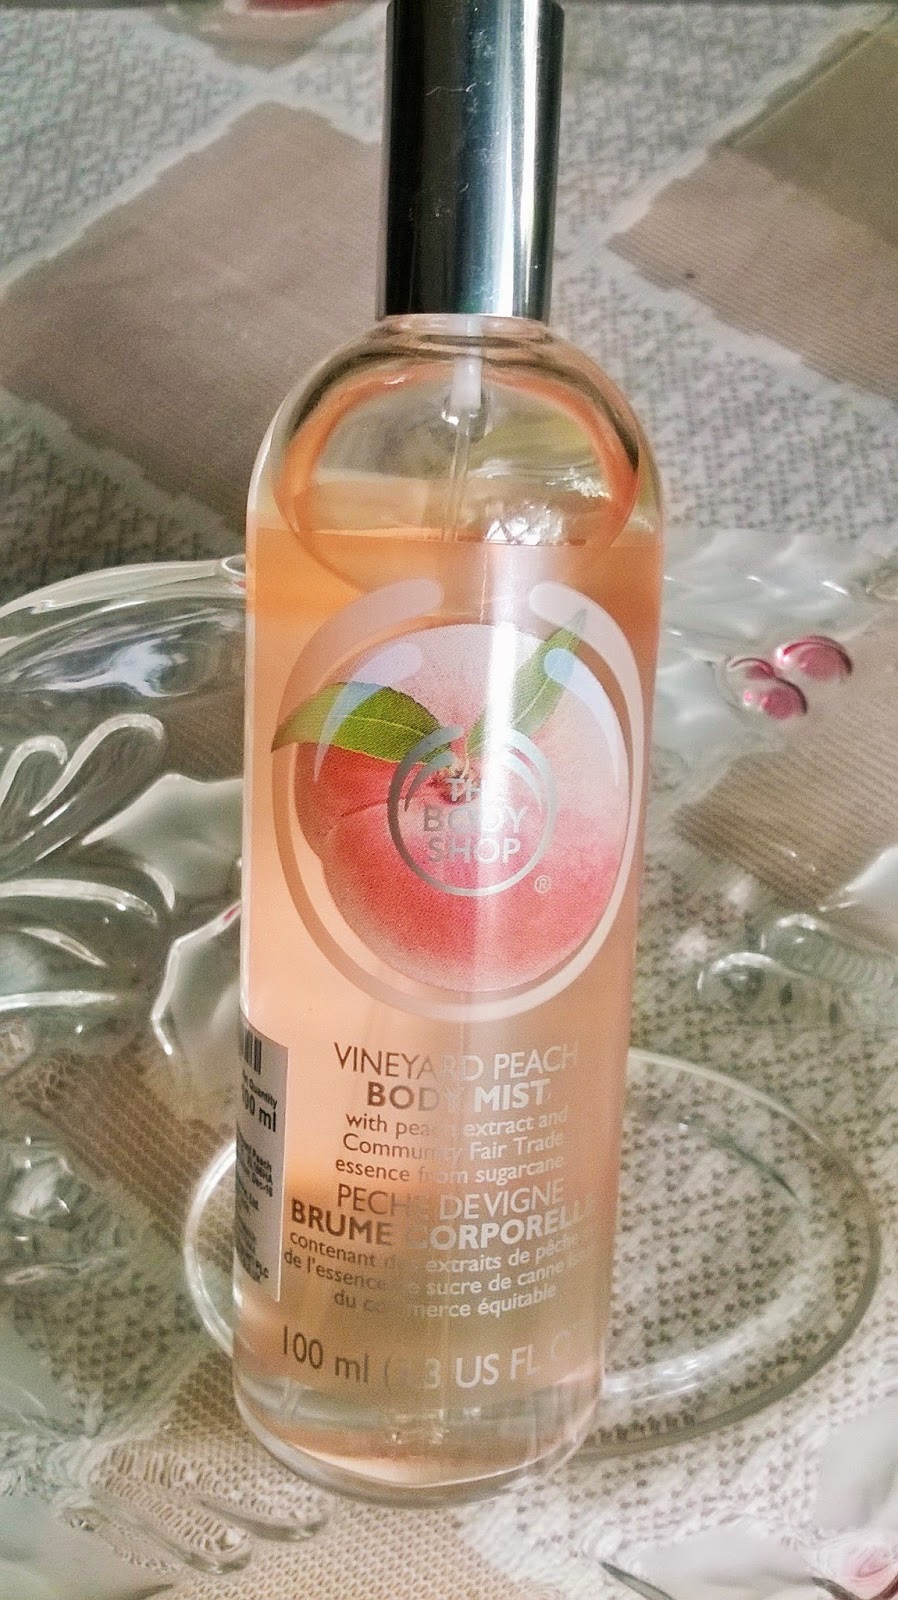 Beauty & Beyond: The Body Shop Vineyard Peach Body Mist Review